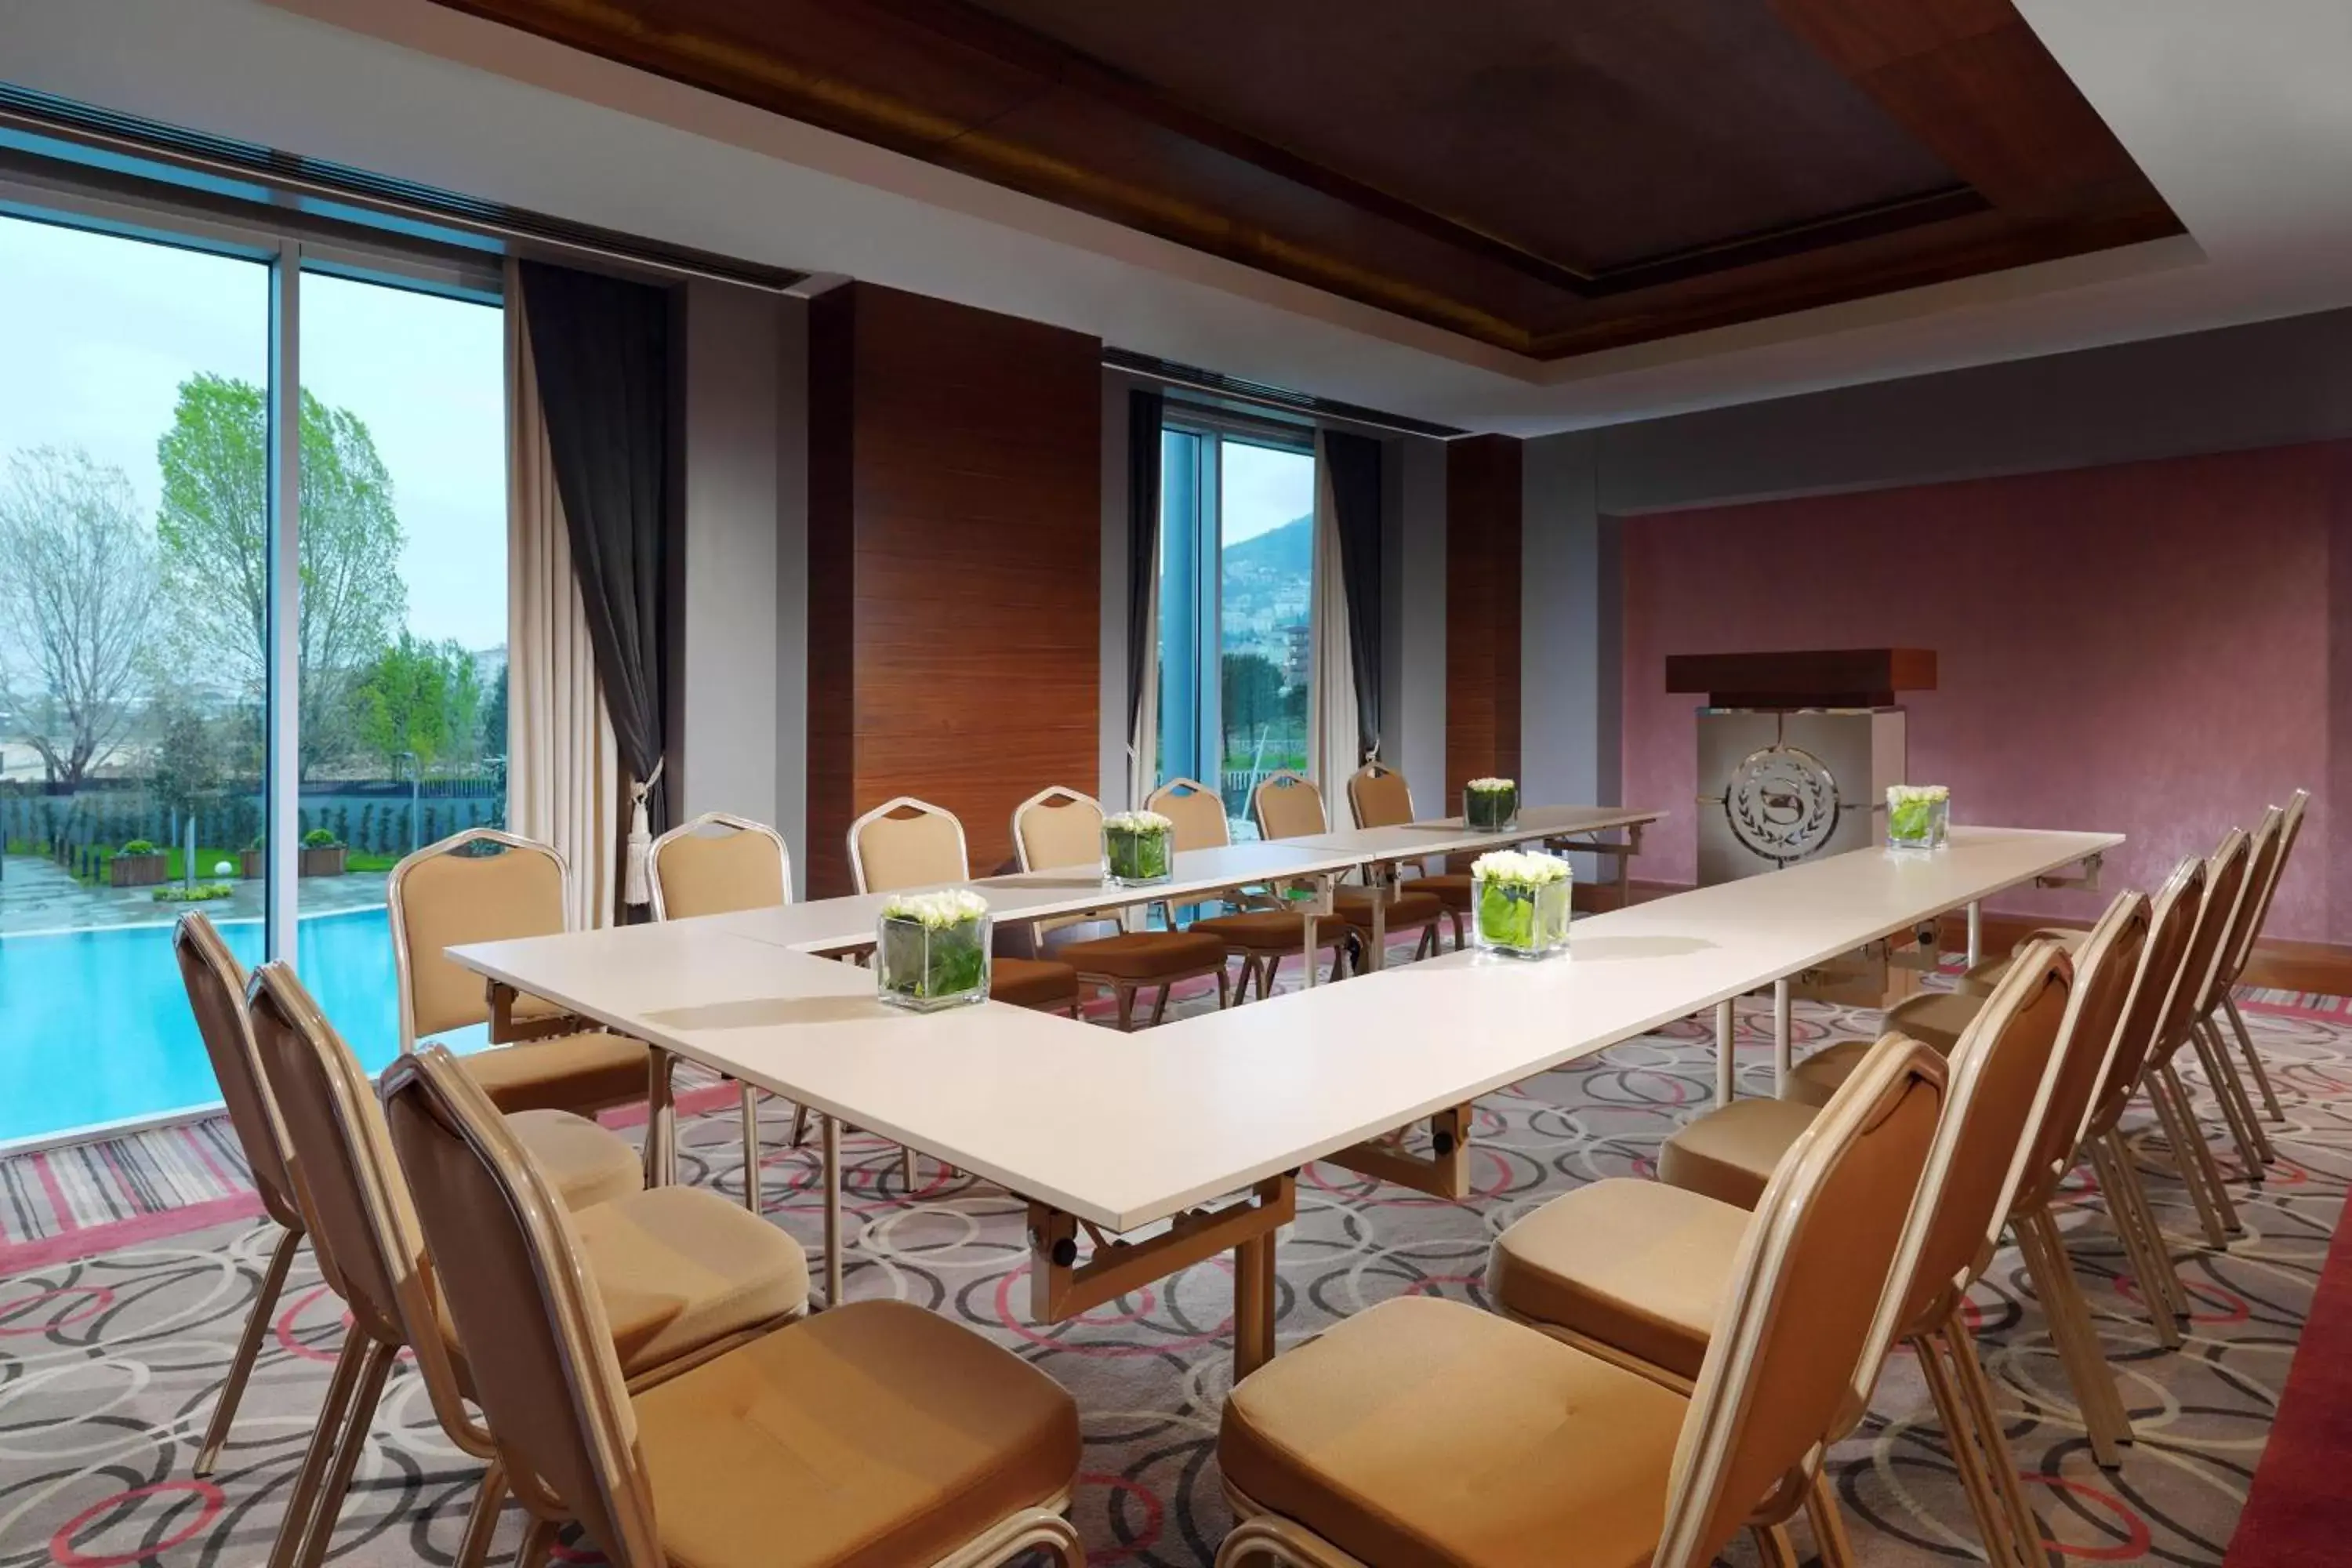 Meeting/conference room in Sheraton Bursa Hotel